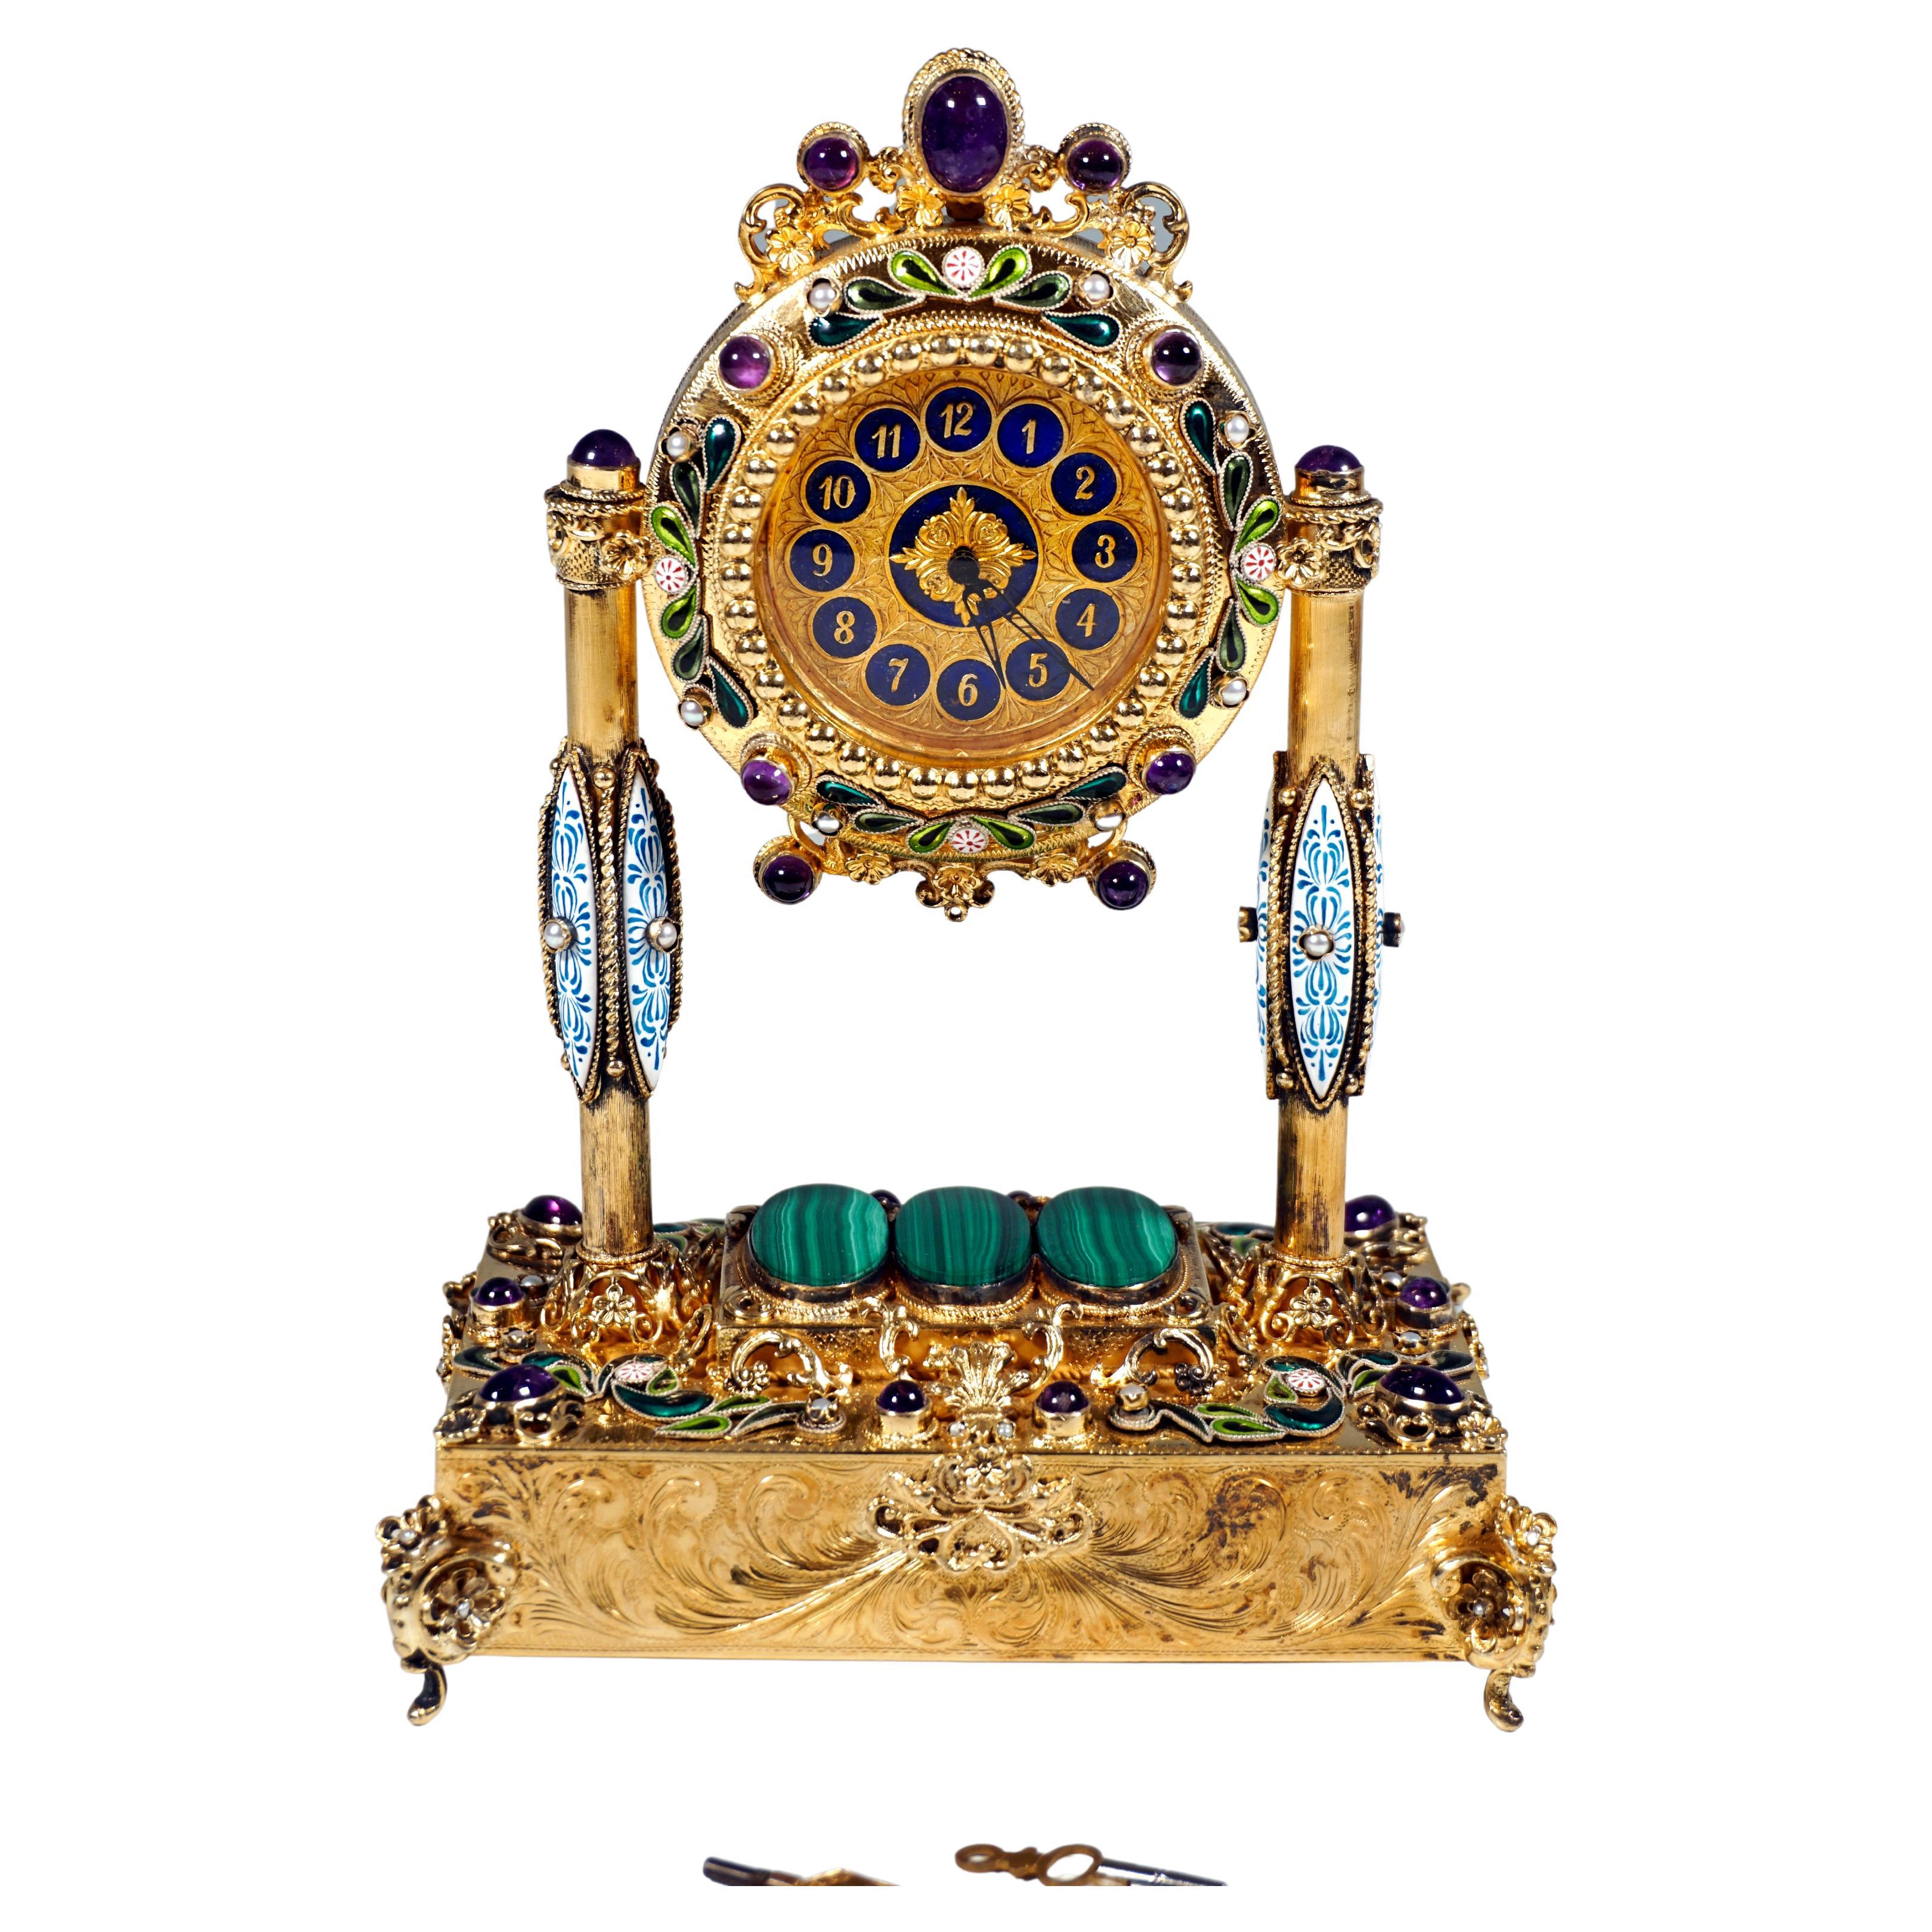 Viennese Silver Historicism Splendour Clock With Musical Movement, Around 1880